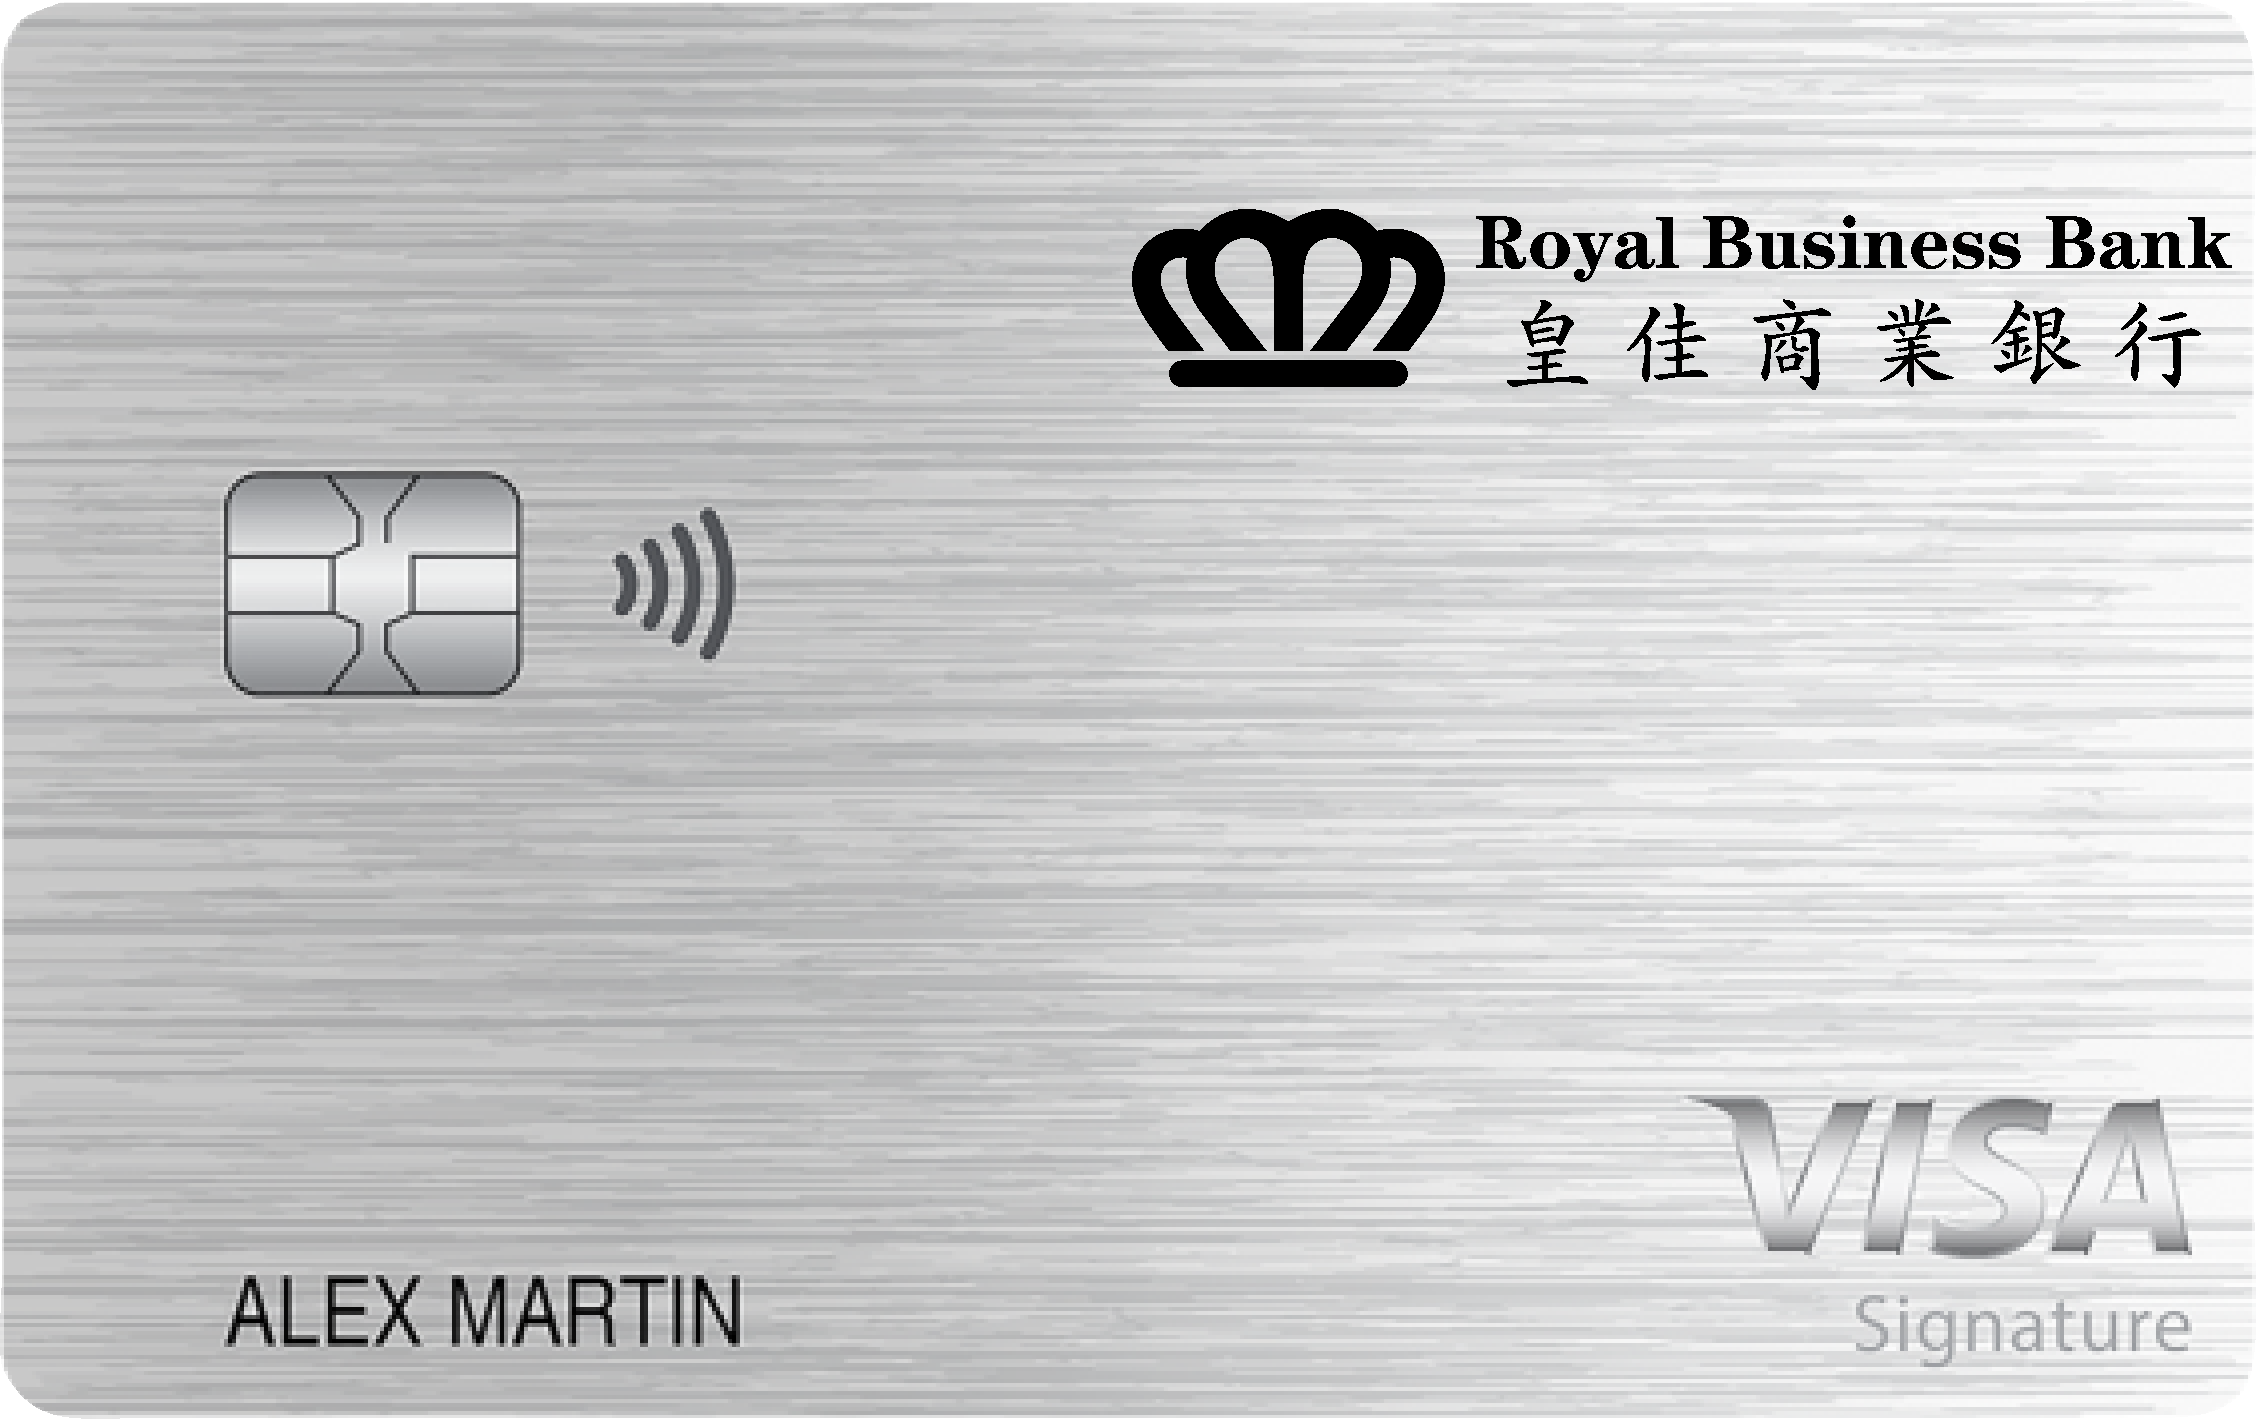 Royal Business Bank Max Cash Preferred Card